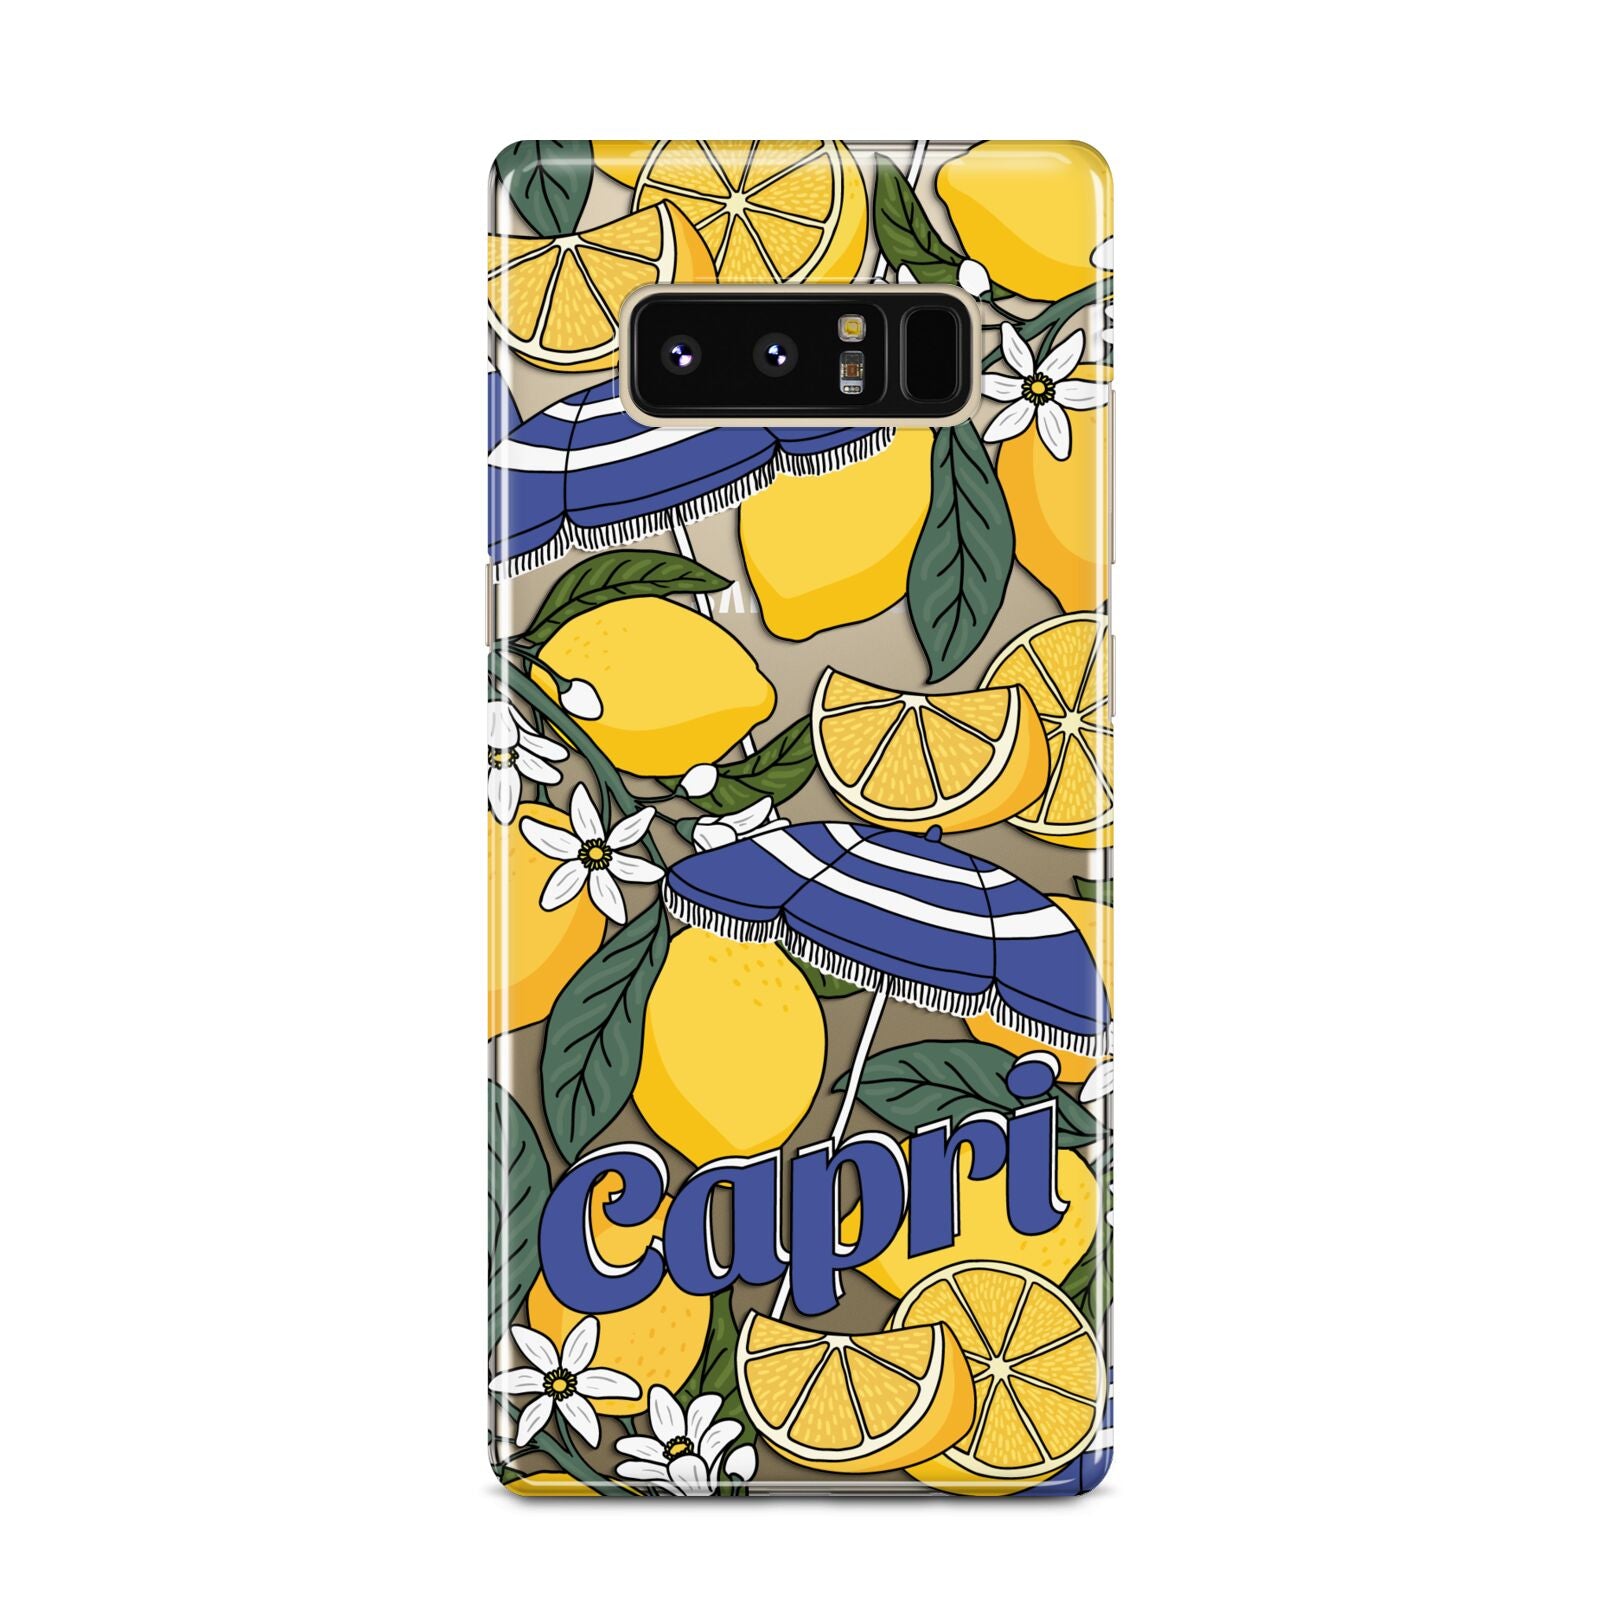 Capri Samsung Galaxy Note 8 Case